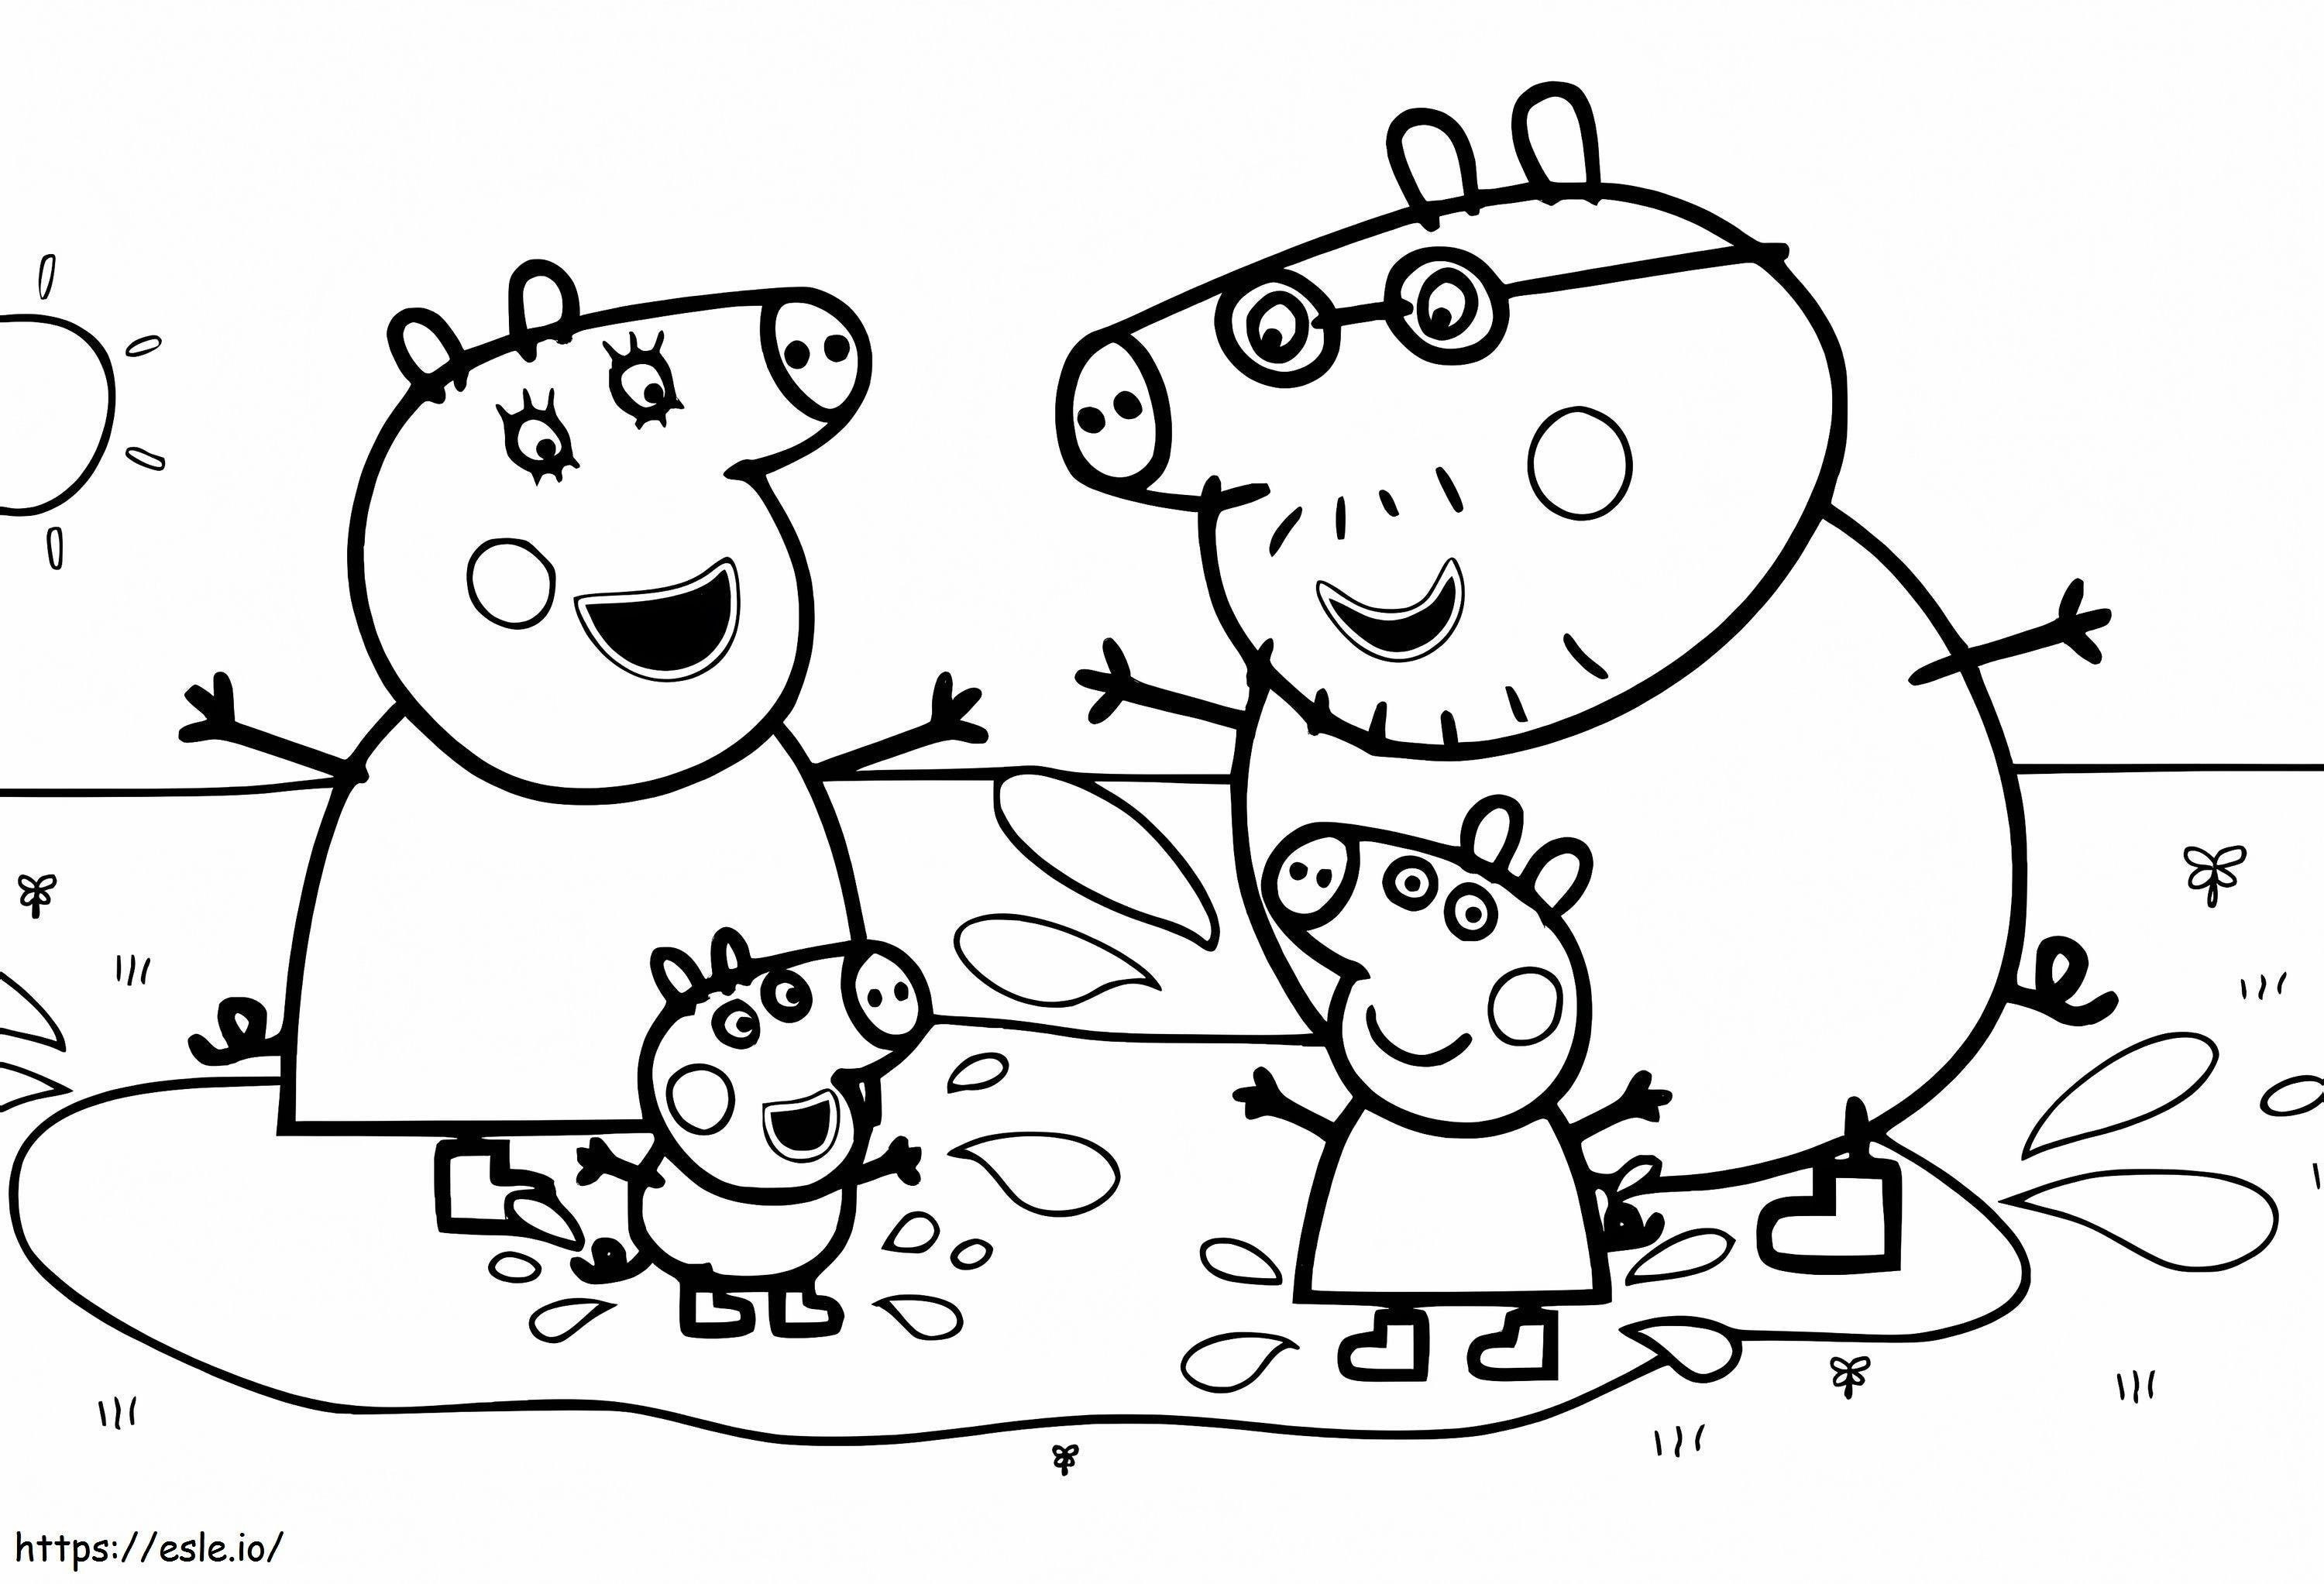 Família Peppa Pig se divertindo para colorir